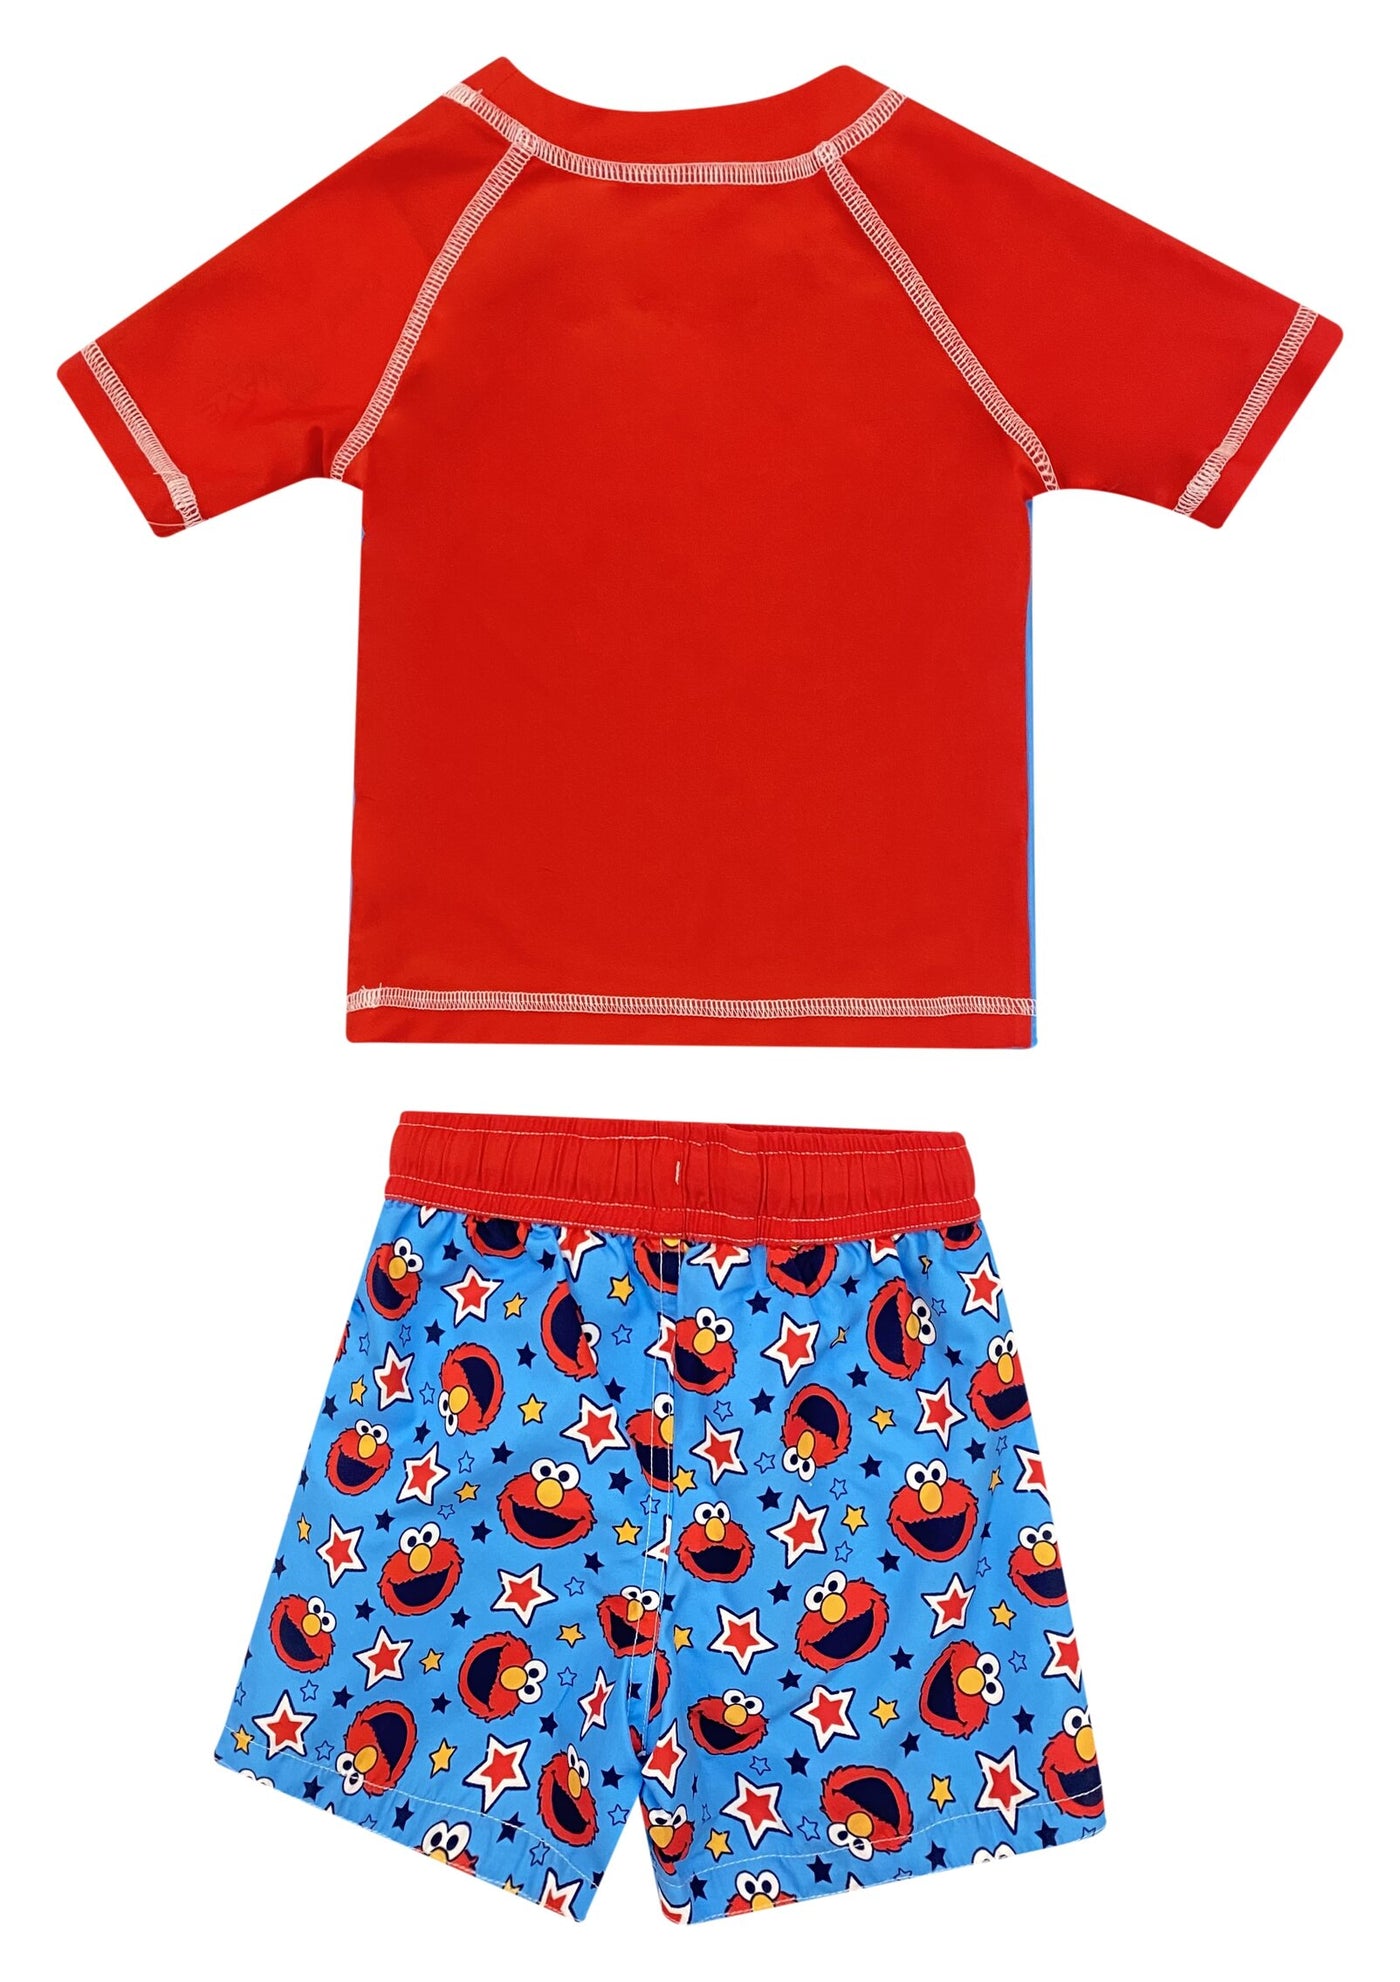 Sesame Street Elmo Pullover Rash Guard and Swim Trunks Outfit Set